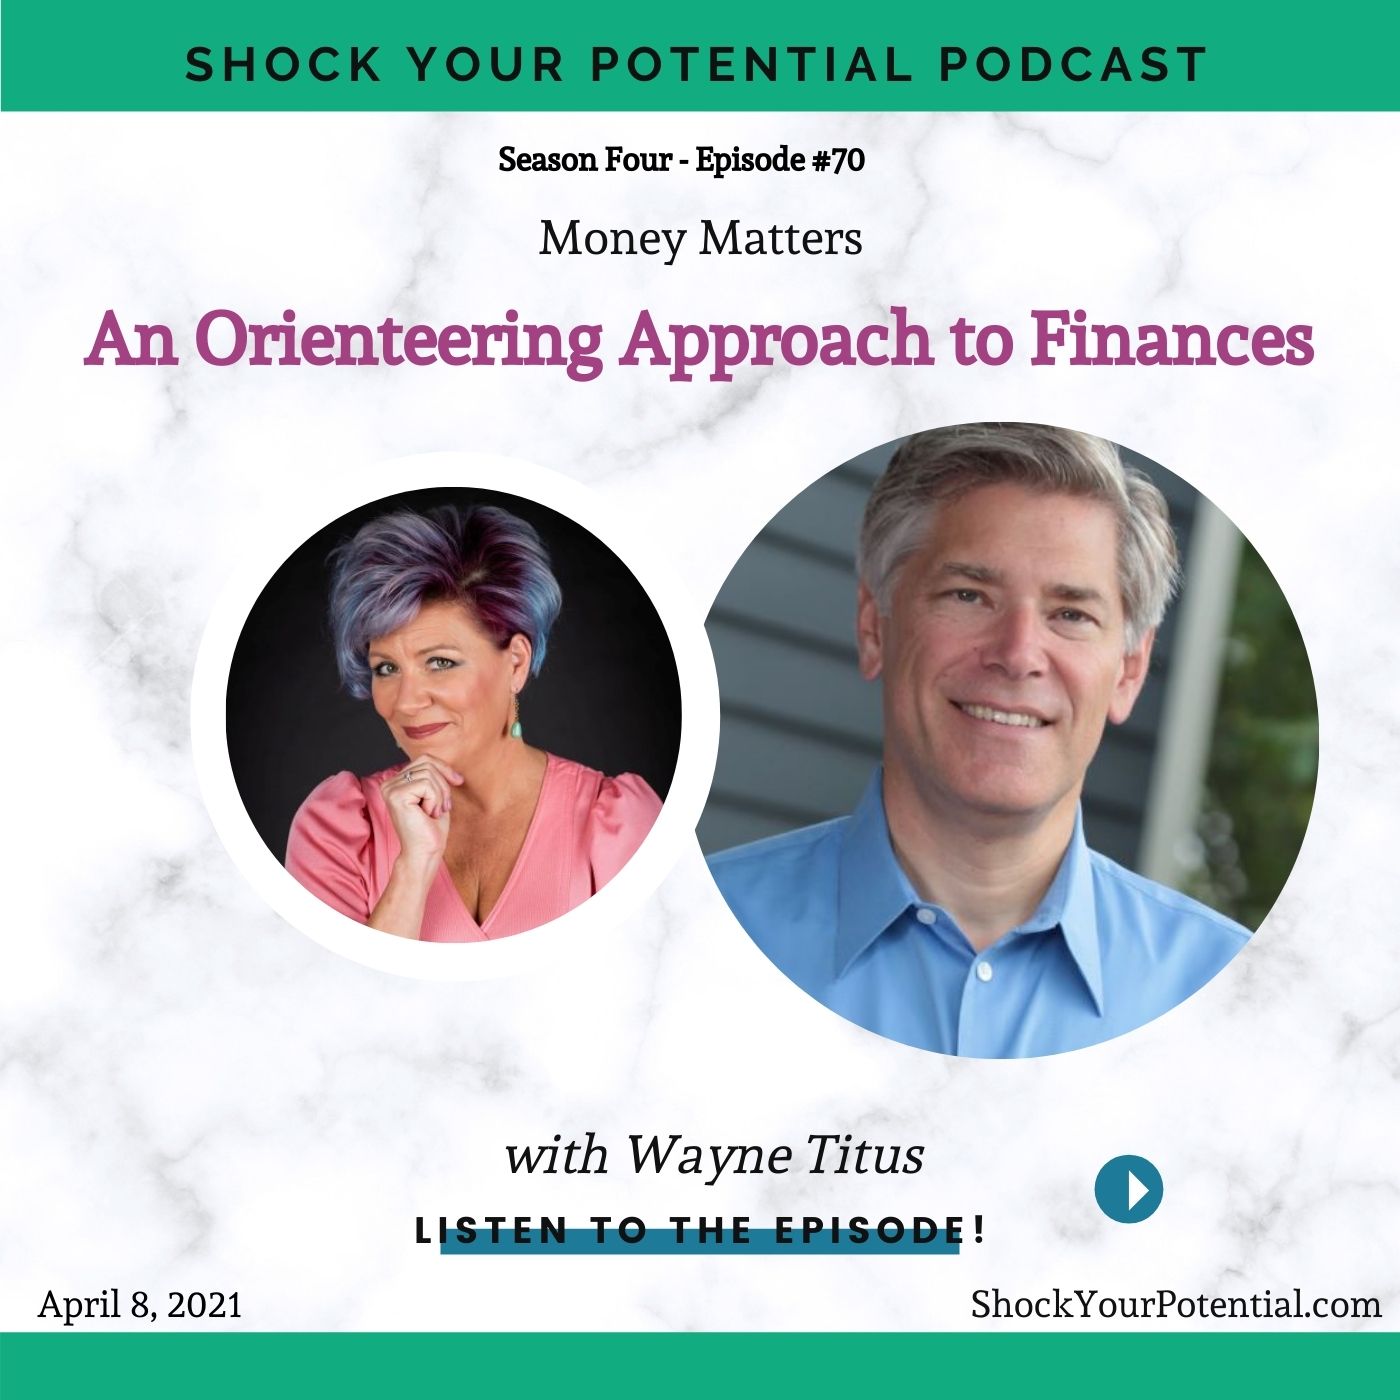 An Orienteering Approach to Finances – Wayne Titus